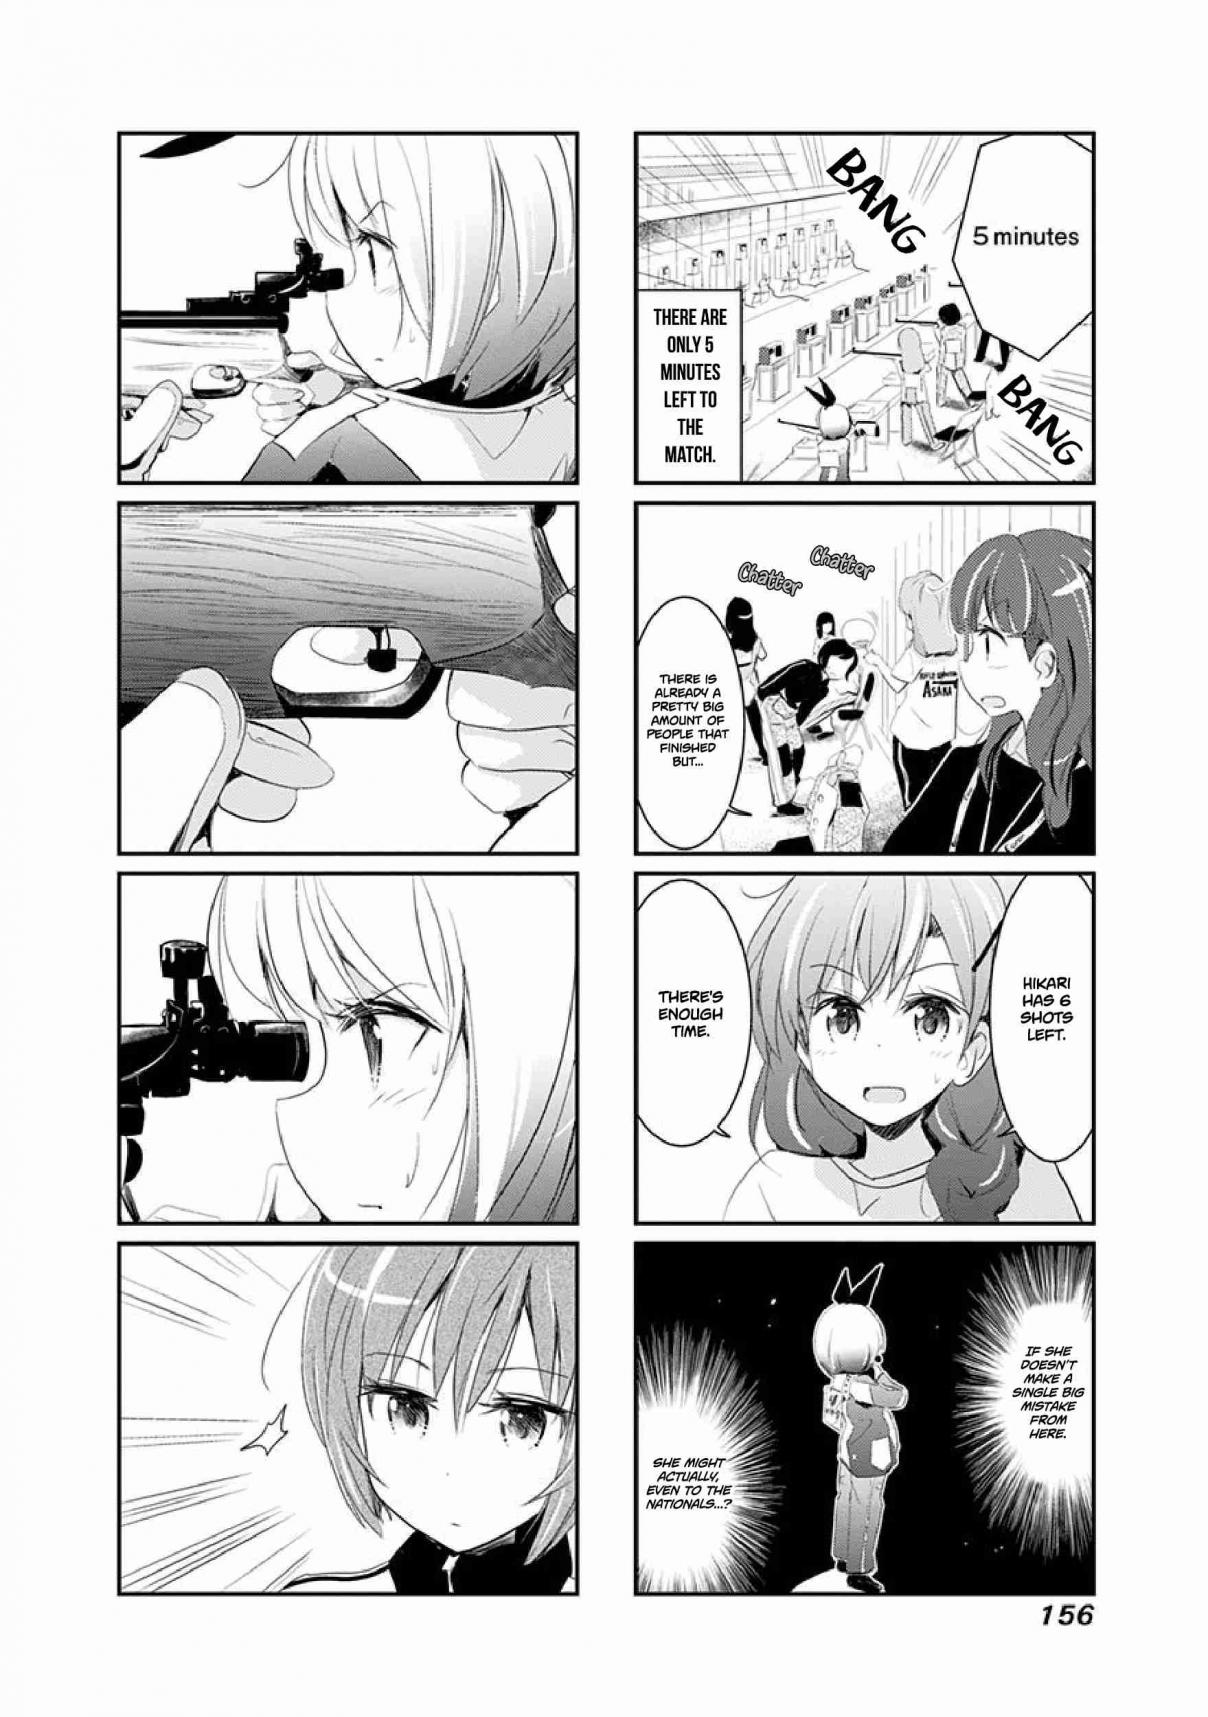 Rifle Is Beautiful Vol. 1 Ch. 19 It's a sports drama manga completely!